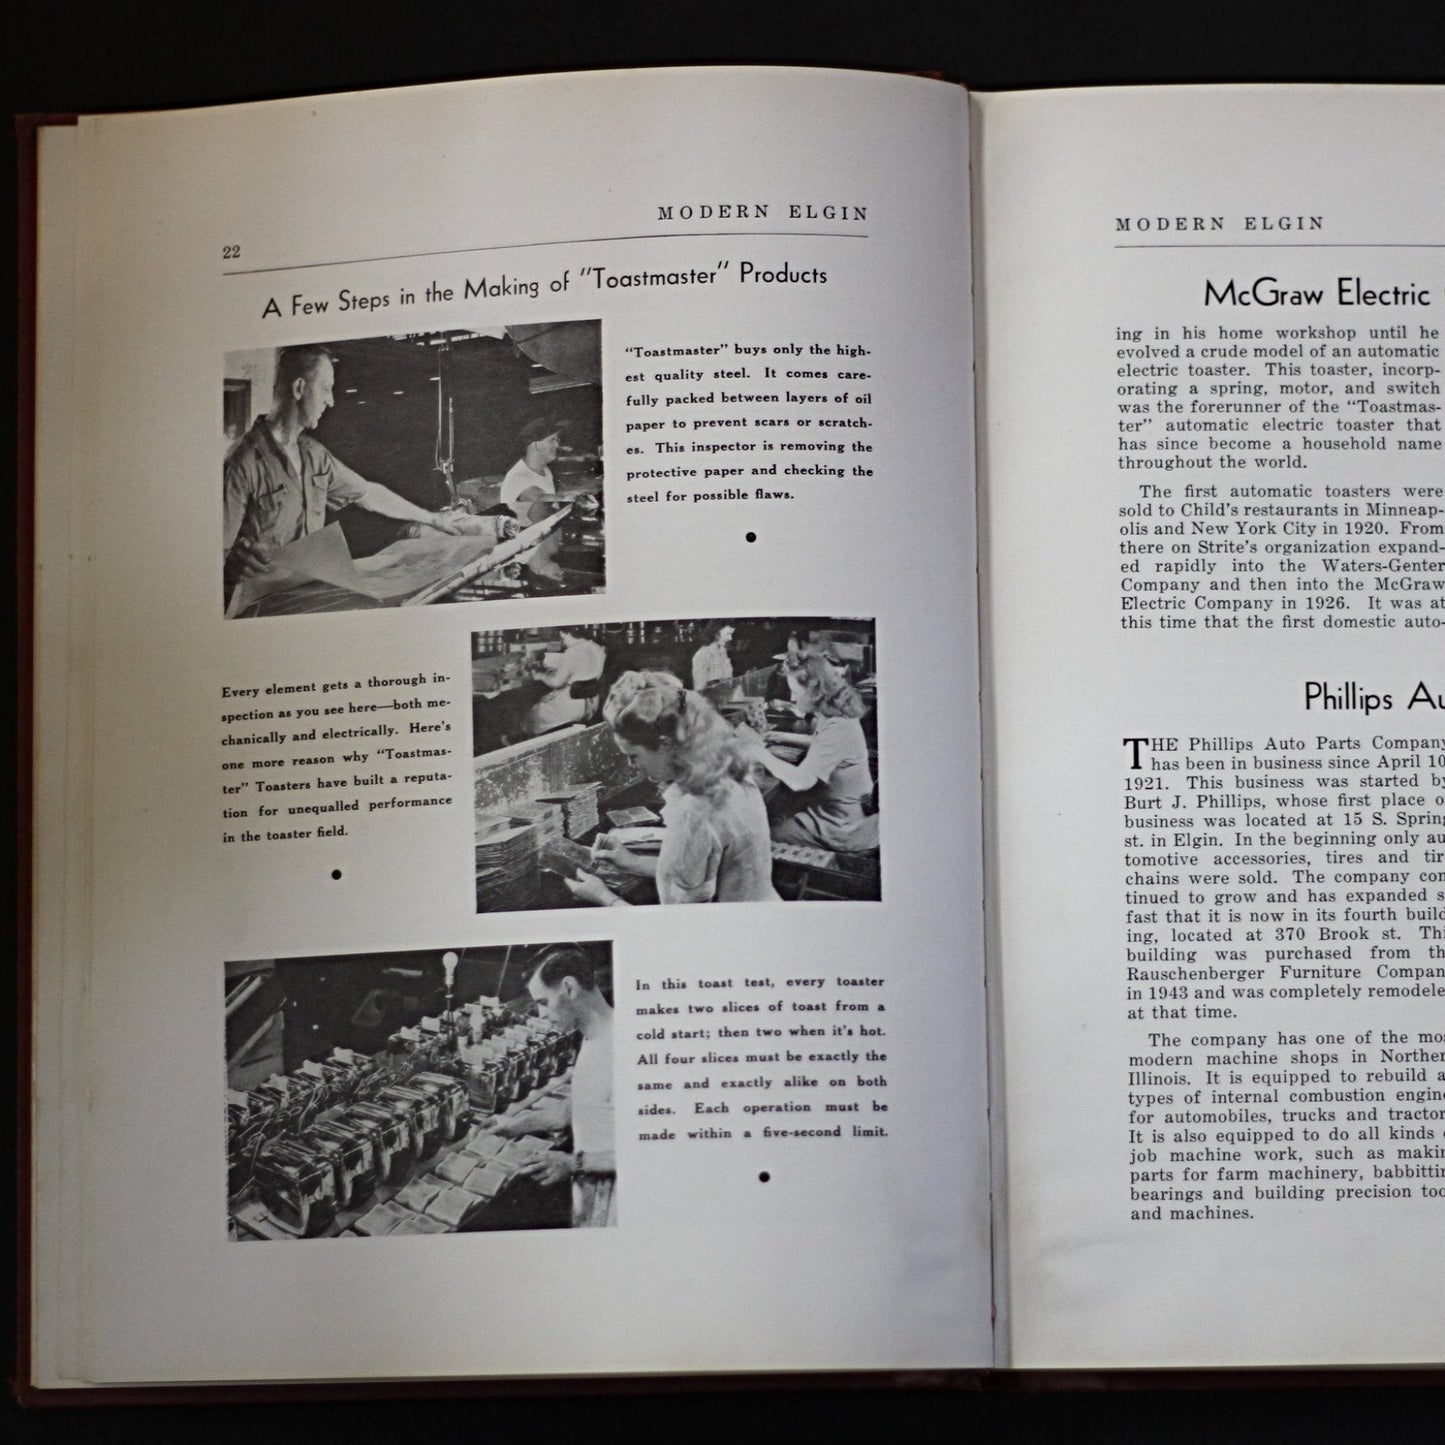 MODERN ELGIN 1950 Book by Alfred H. Kirkland